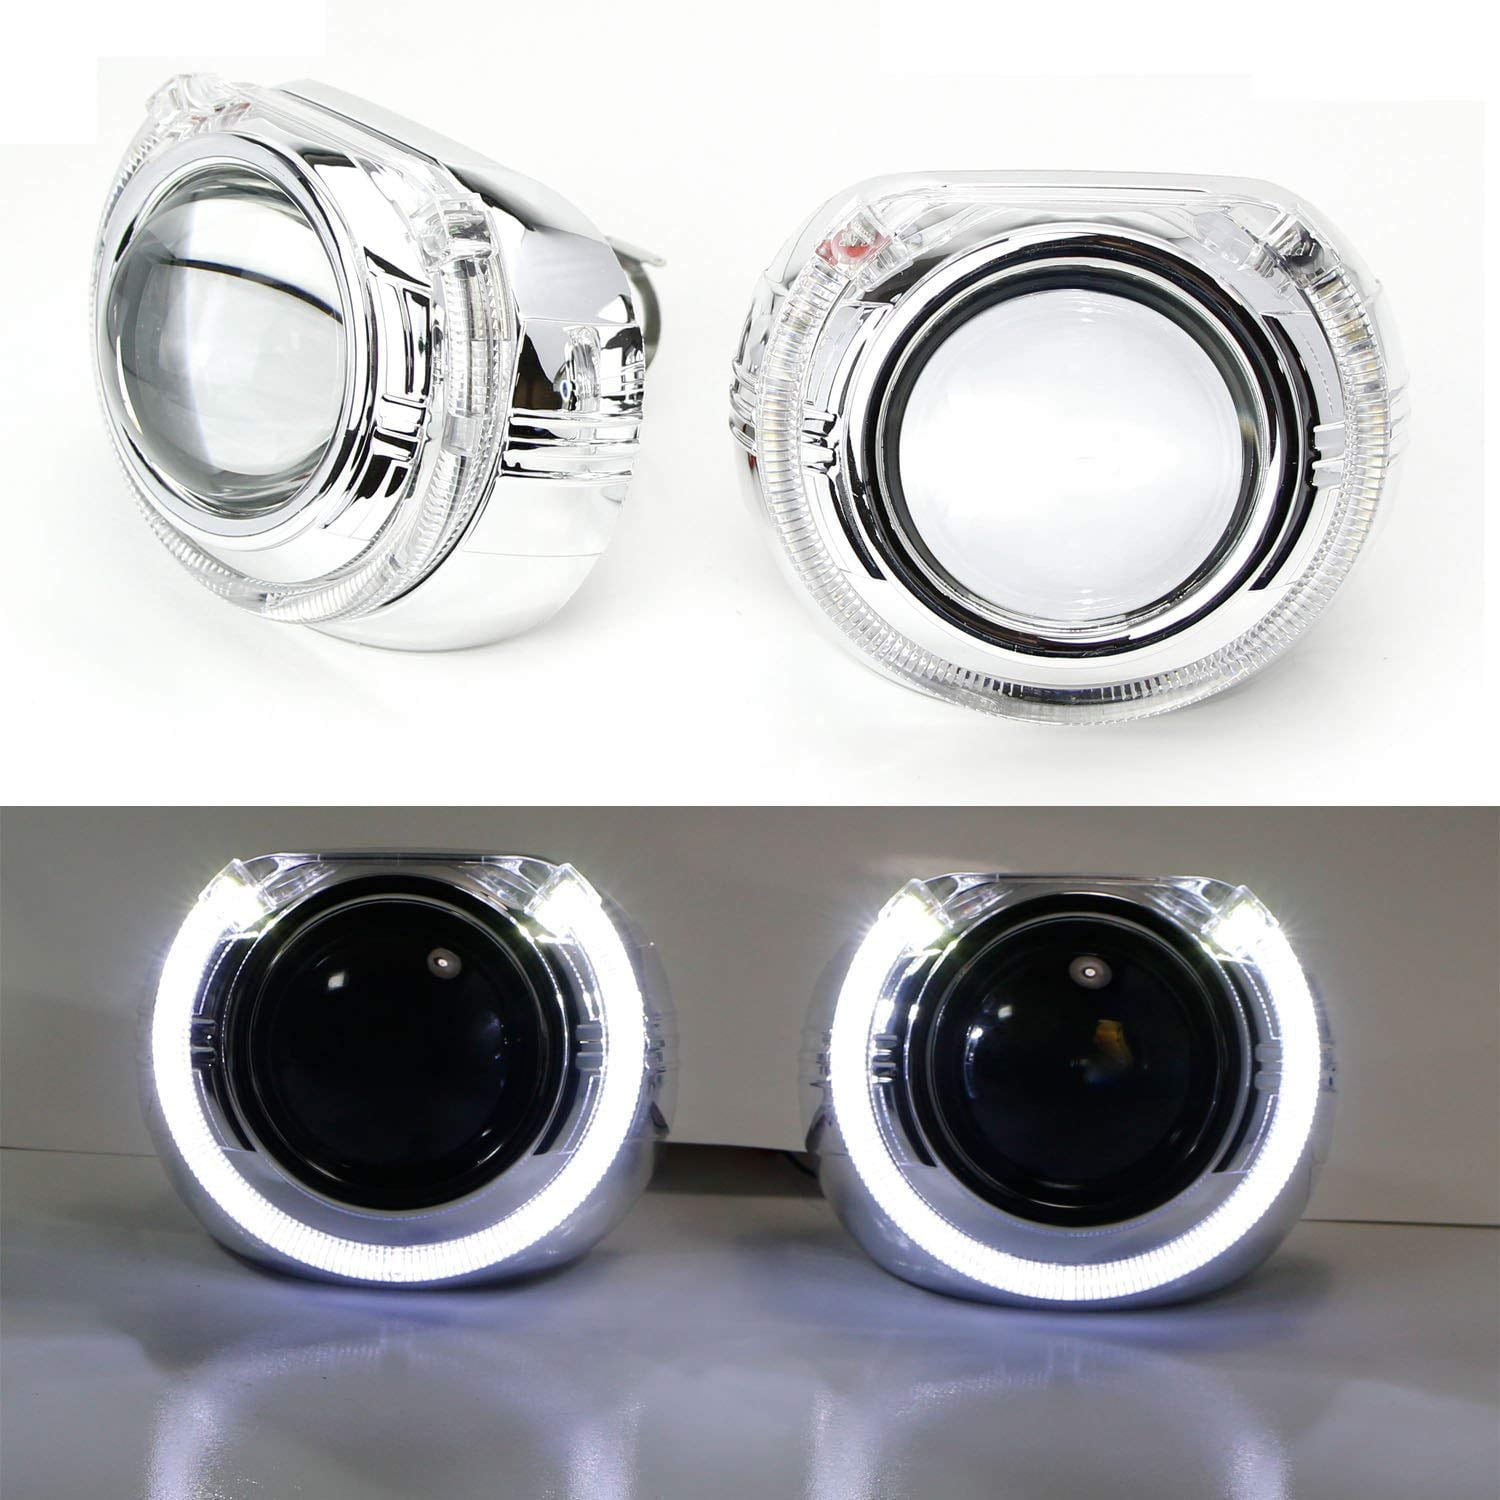 2 3.0-Inch H1 Bi-Xenon Headlamp Projector Lens Compatible With Headlights Retrofit iJDMTOY Custom Headlamps Conversion 